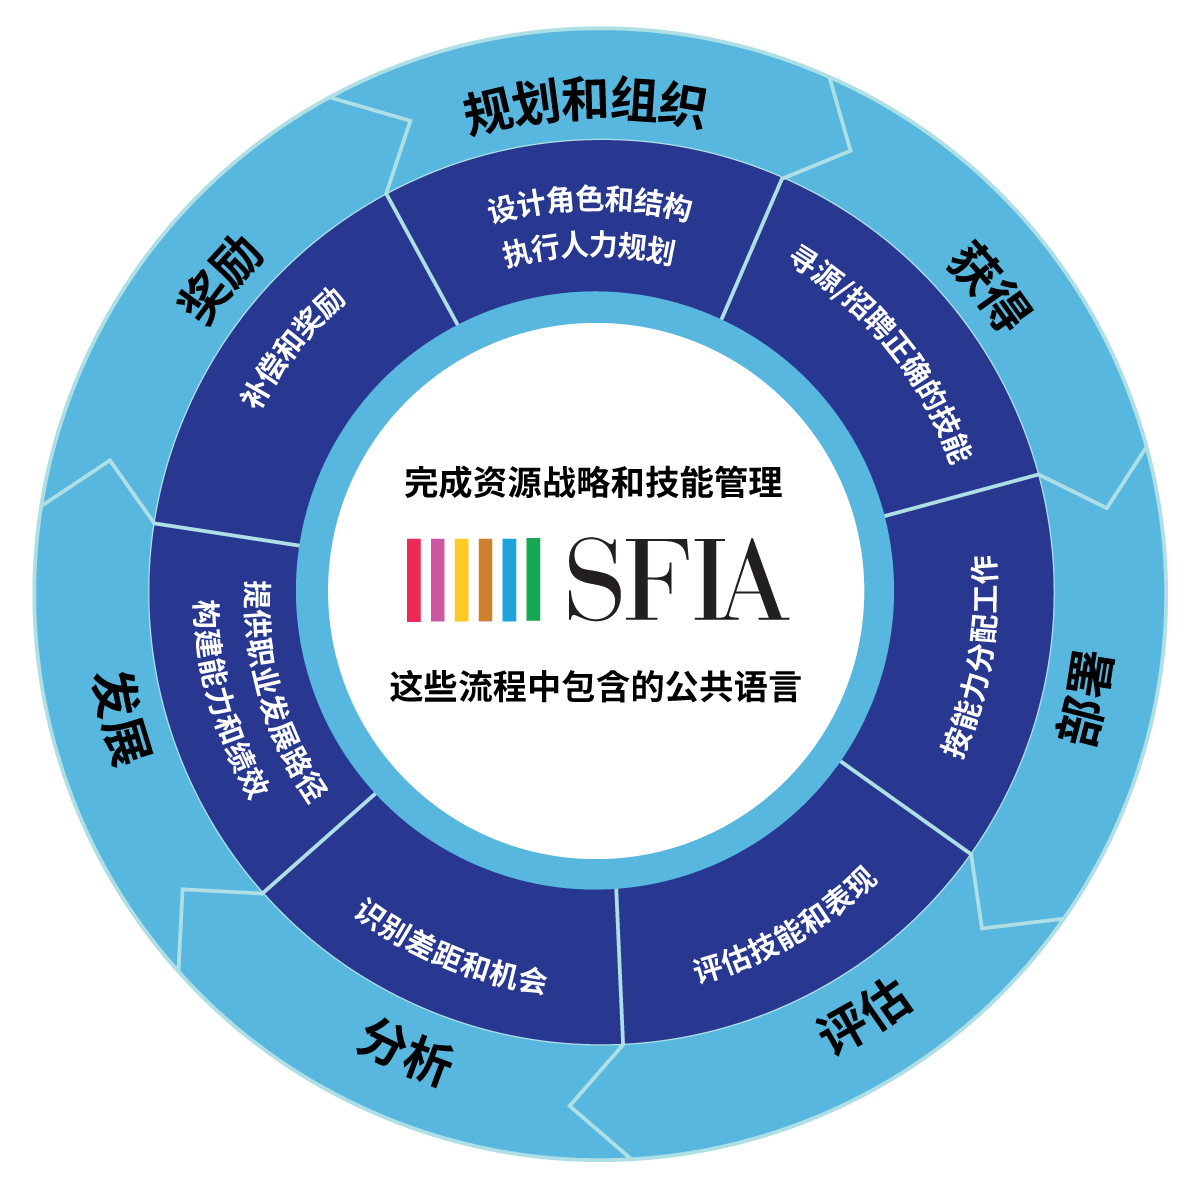 SFIA-Process-Wheel-04.zh.png